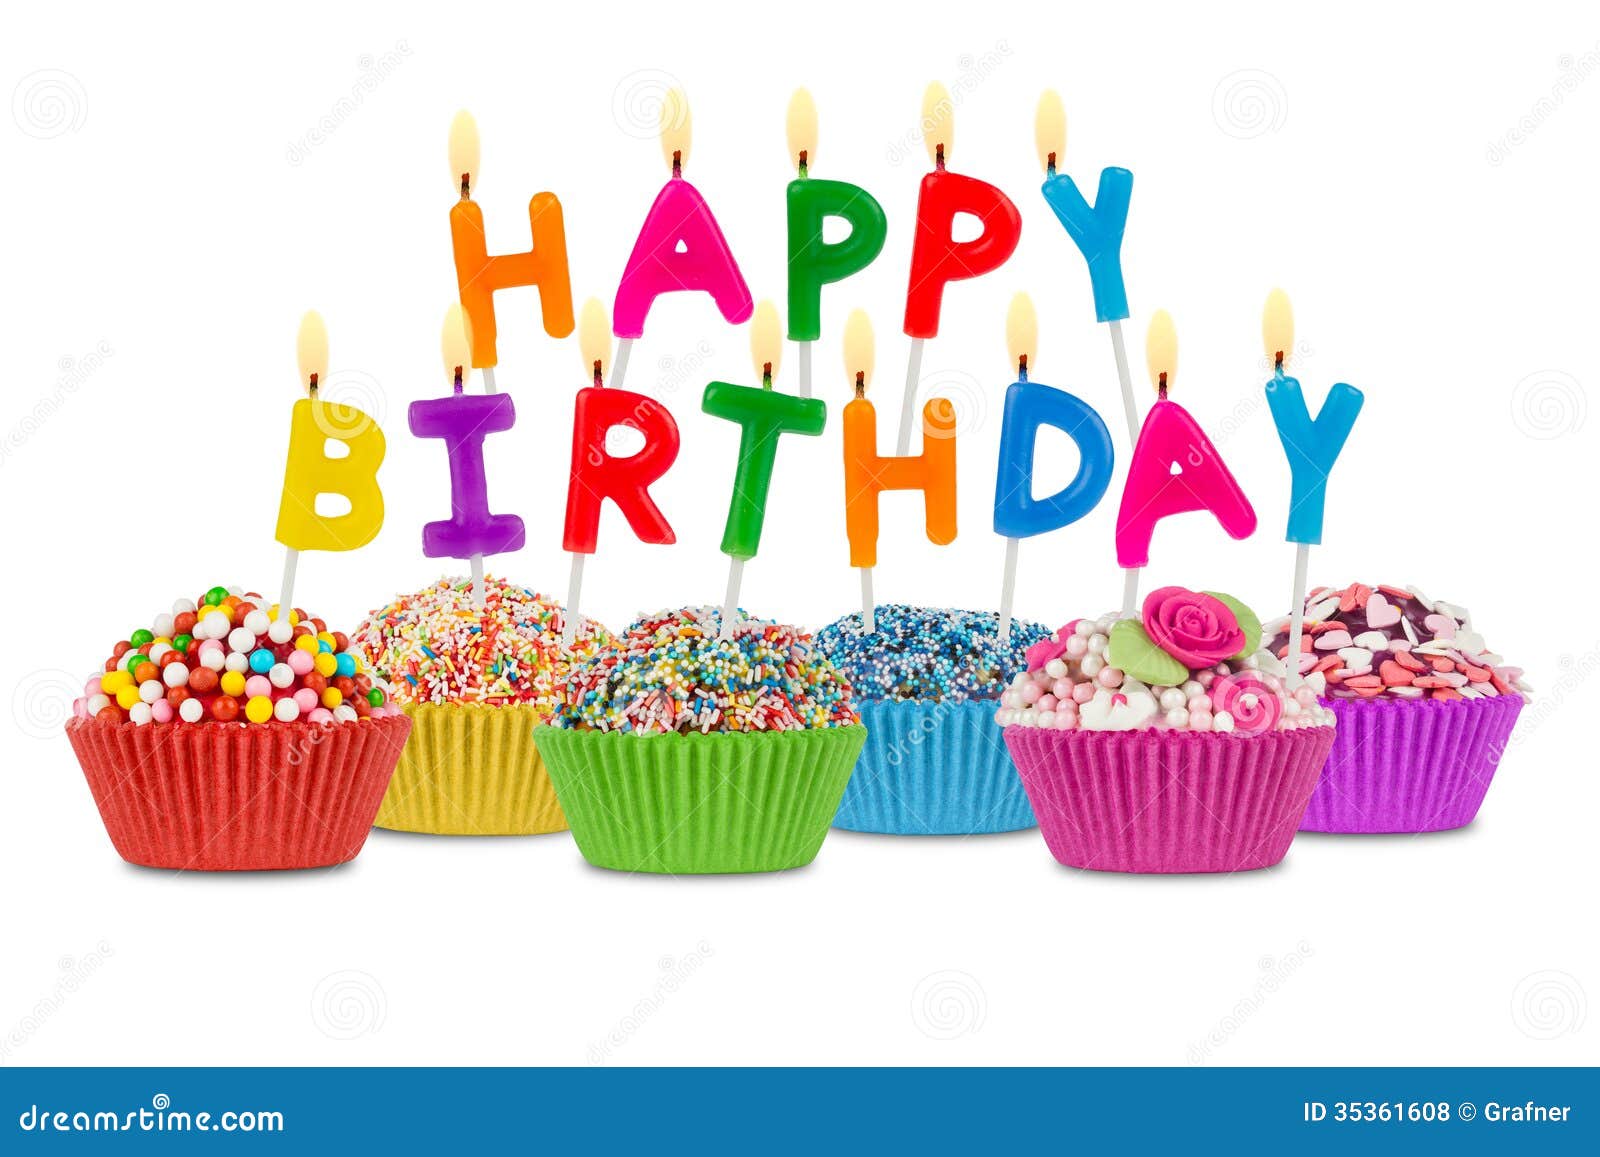 happy-birthday-cupcakes-row-lettering-35361608.jpg